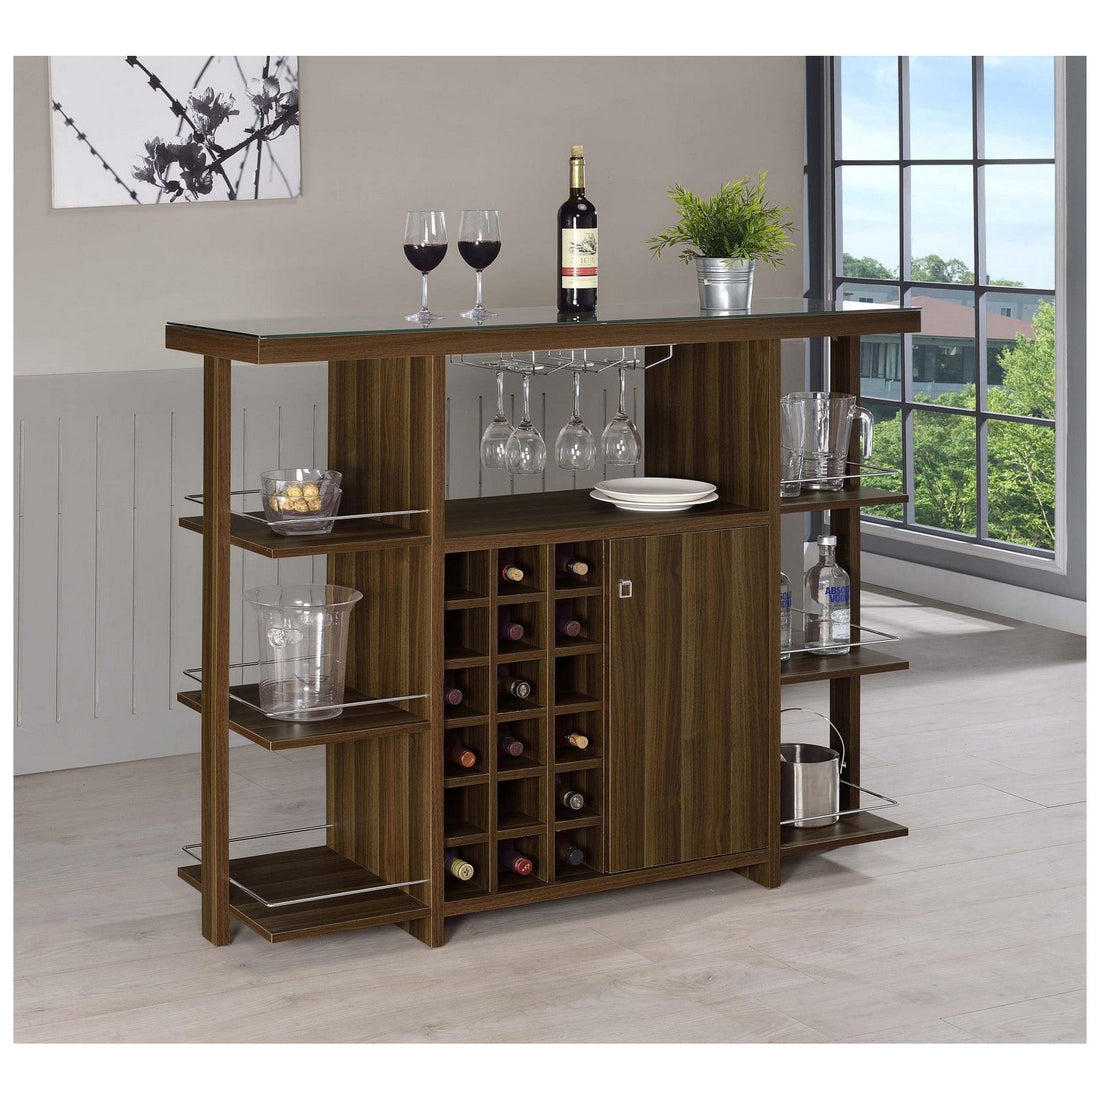 Diggs Bar Unit with Wine Bottle Storage Walnut 100439